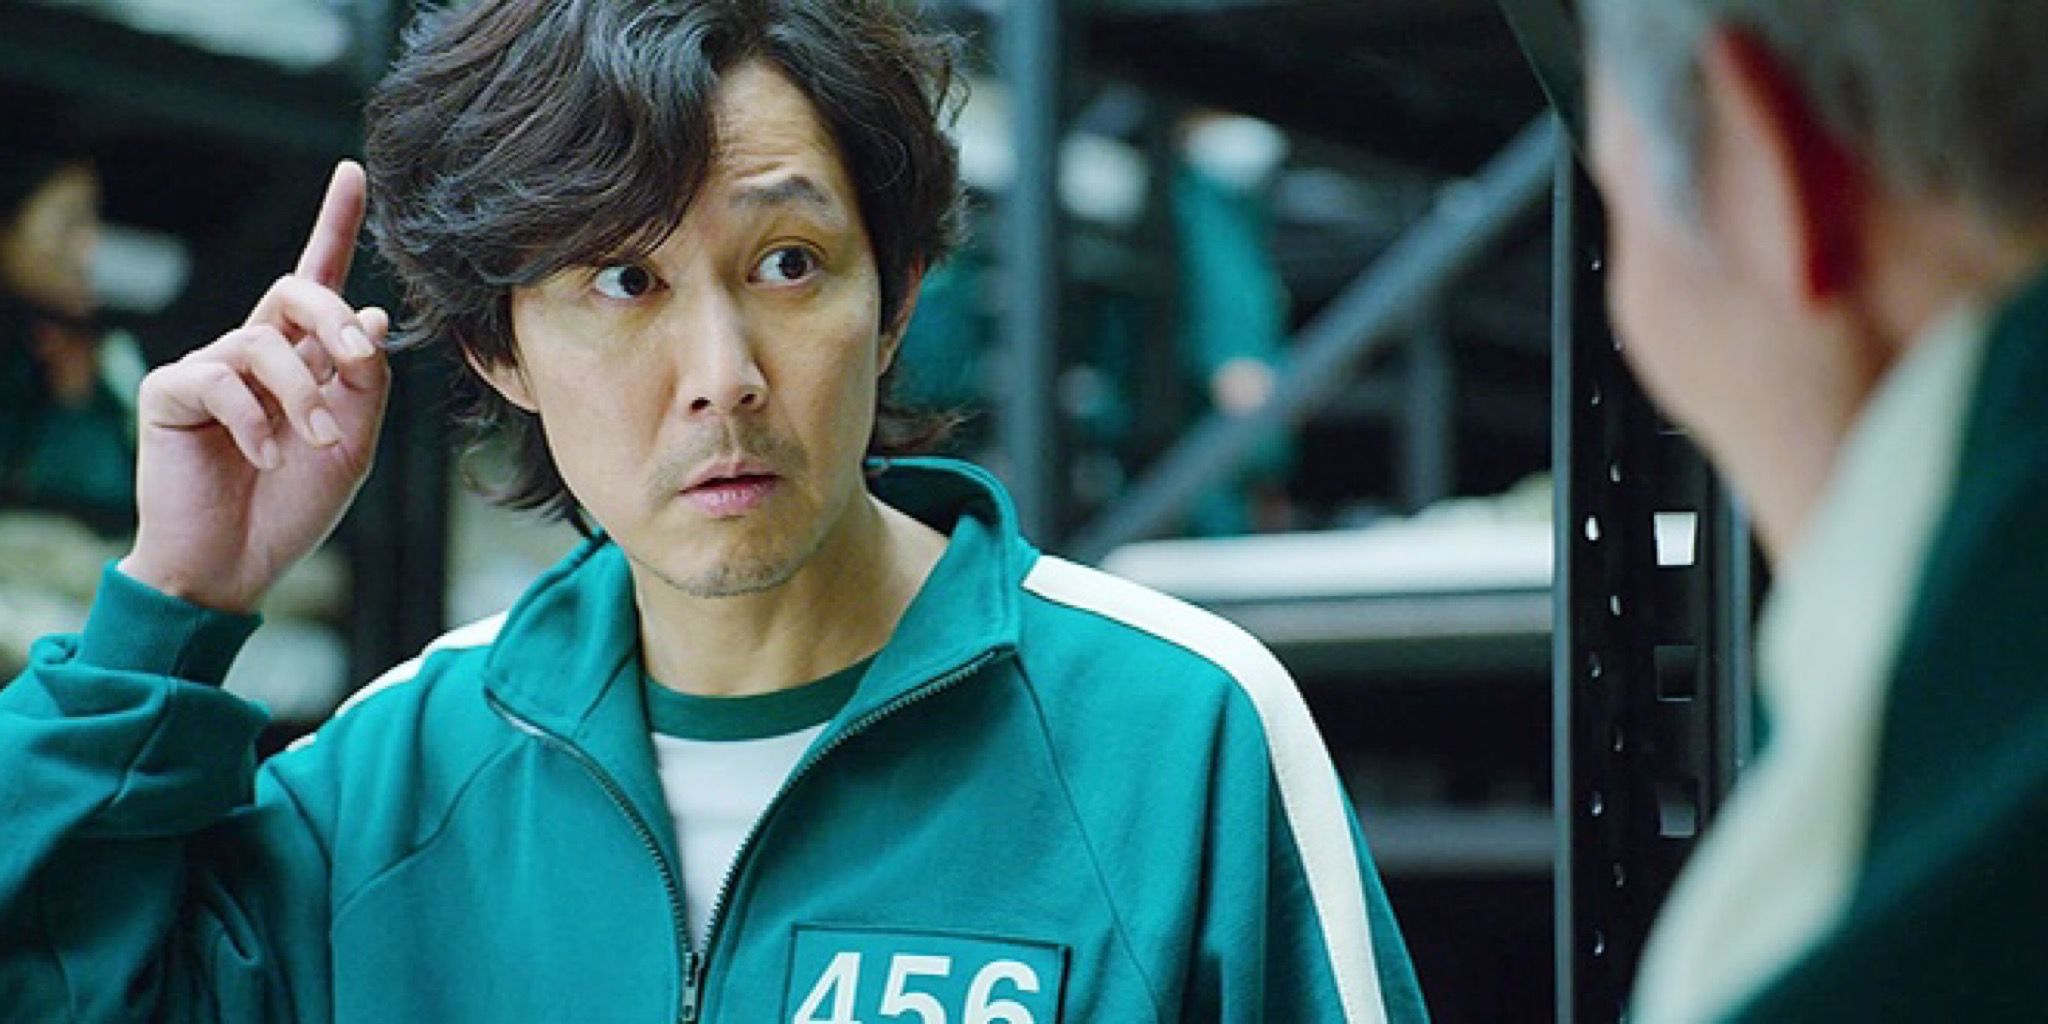 Lee Jung-jae as Seong Gi-hun in Squid Game (2021).